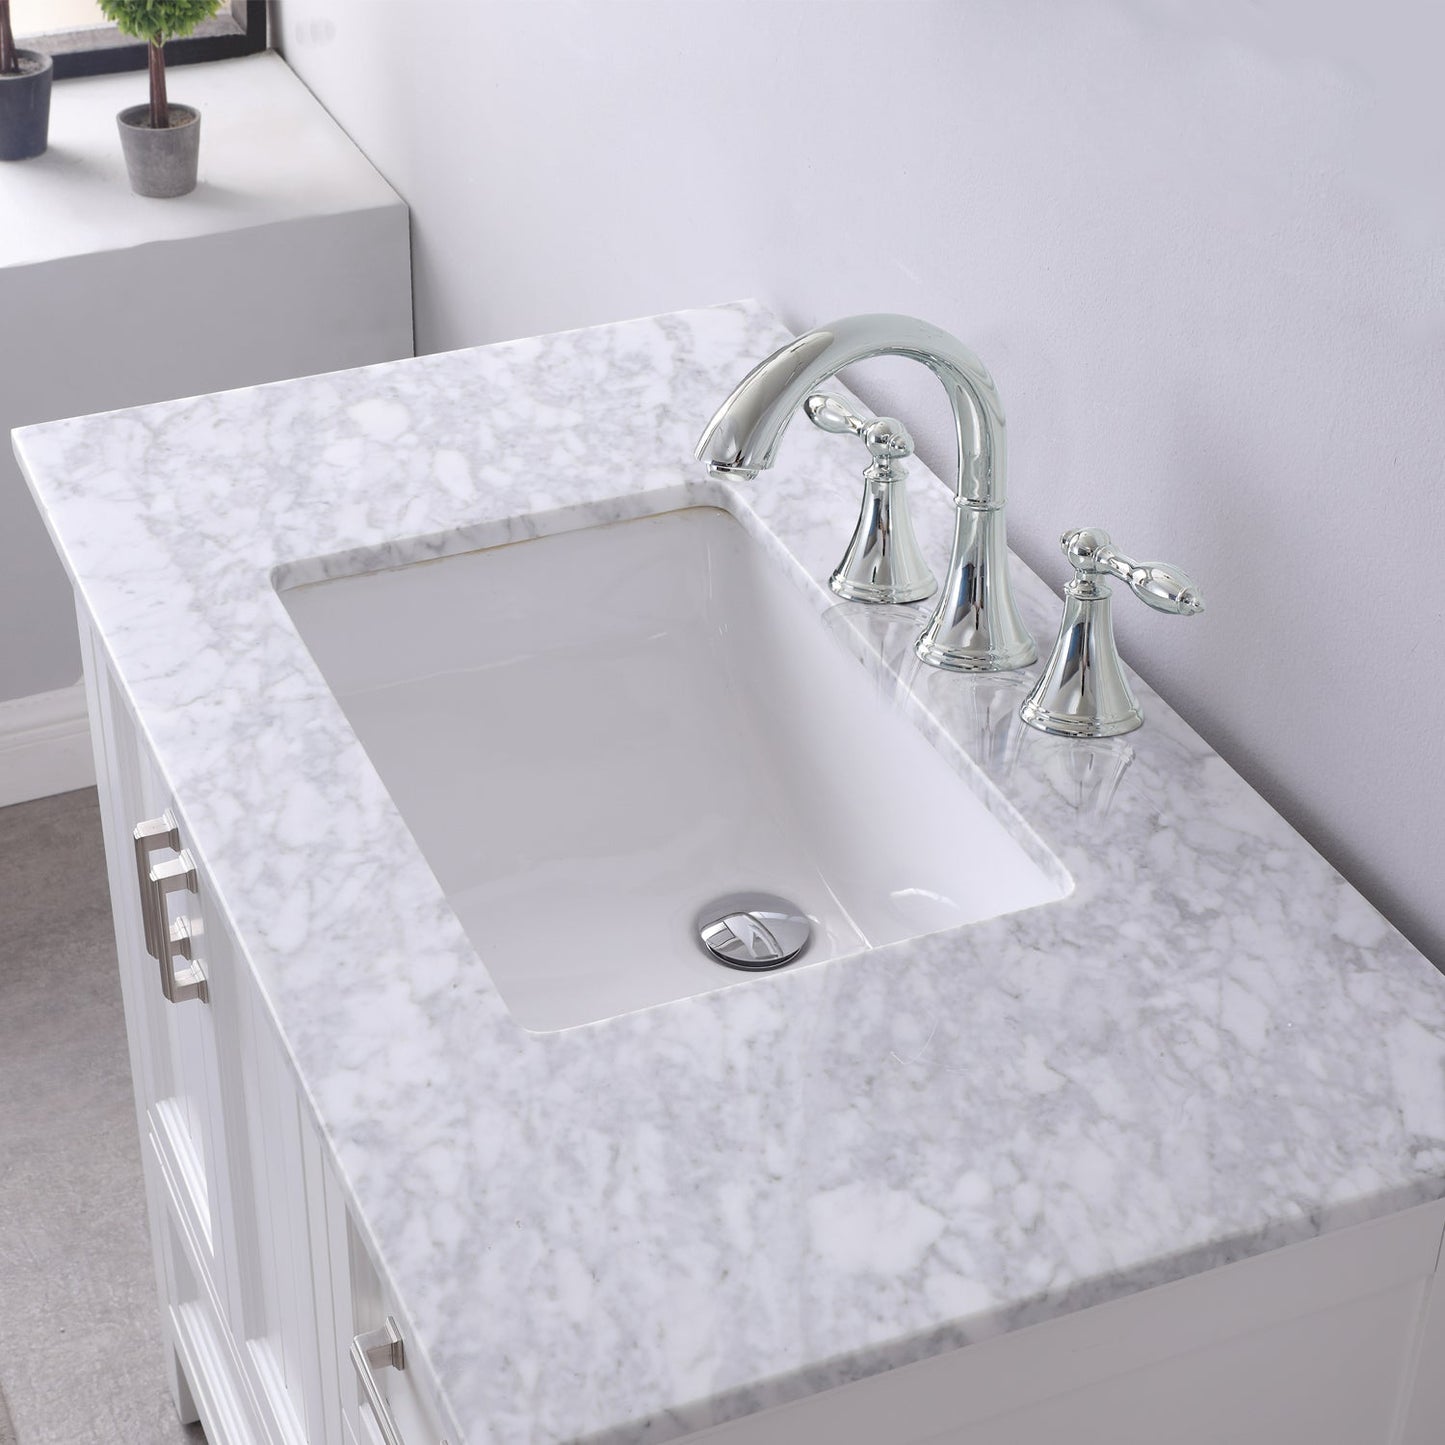 Isla 36" Single Bathroom Vanity Set in White and Carrara White Marble Countertop with Mirror